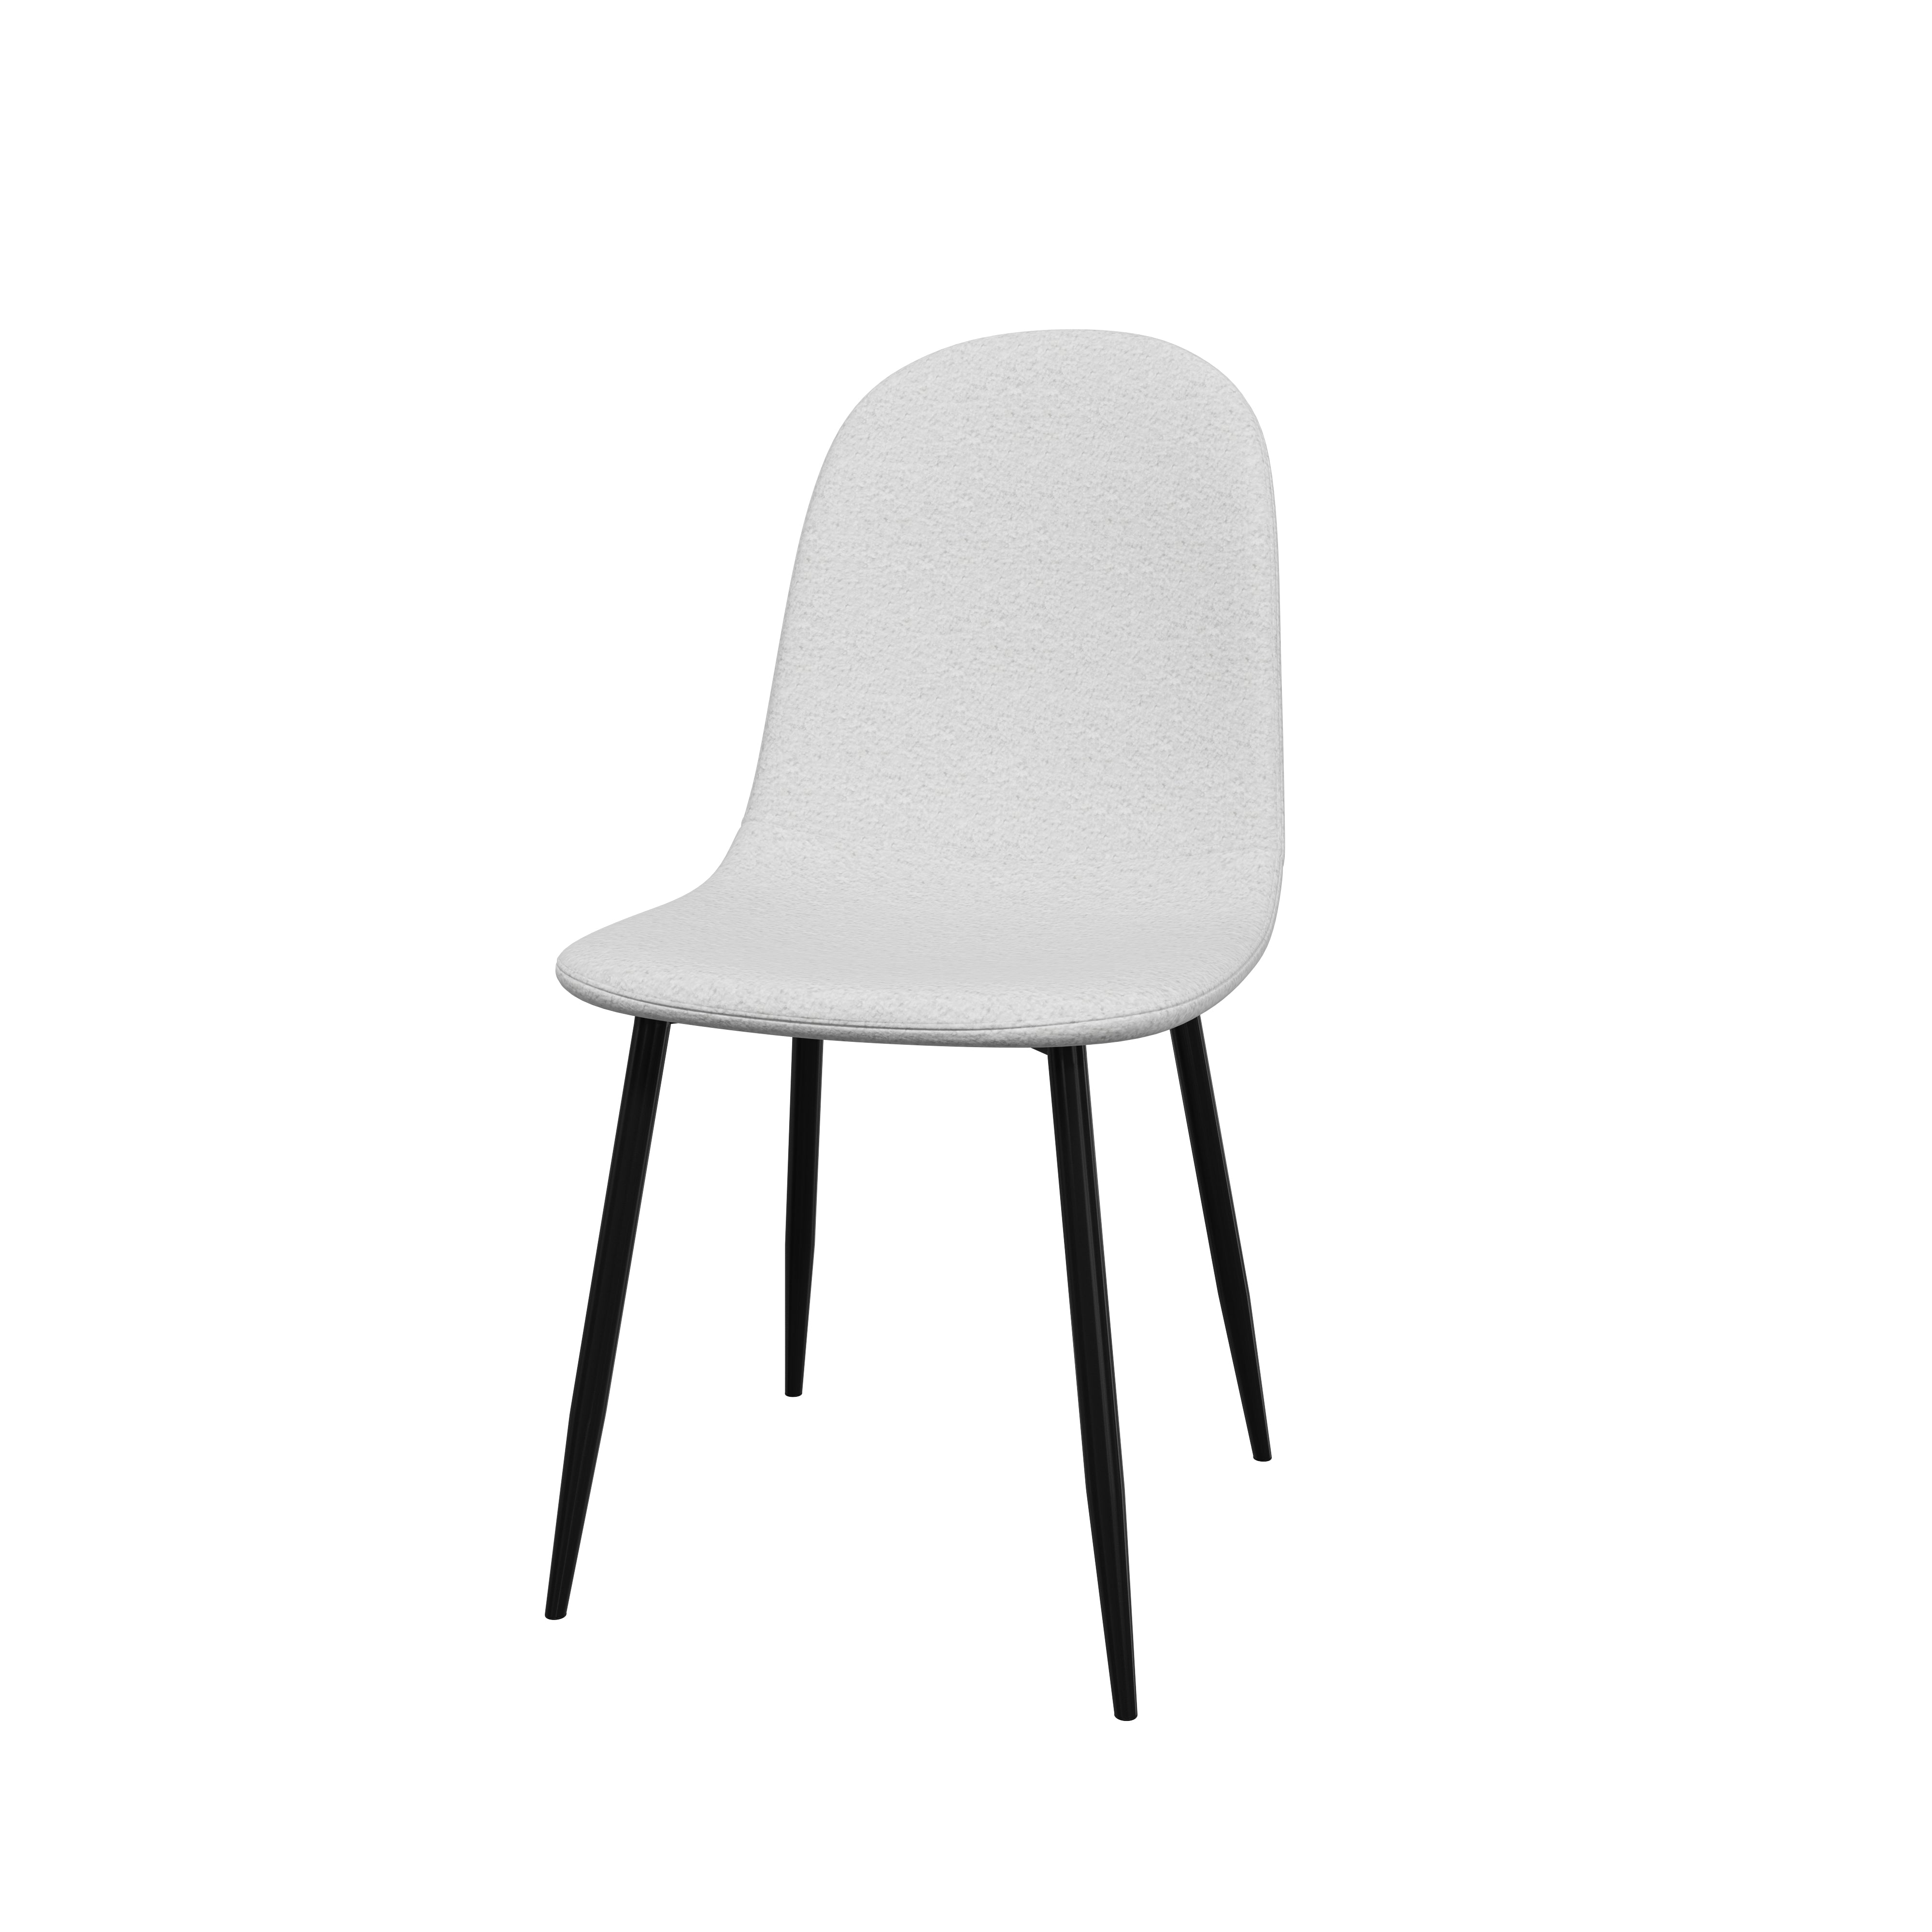 Set de 4 sillas tela bouclé Oxford - Blanco y Negro - Tugow